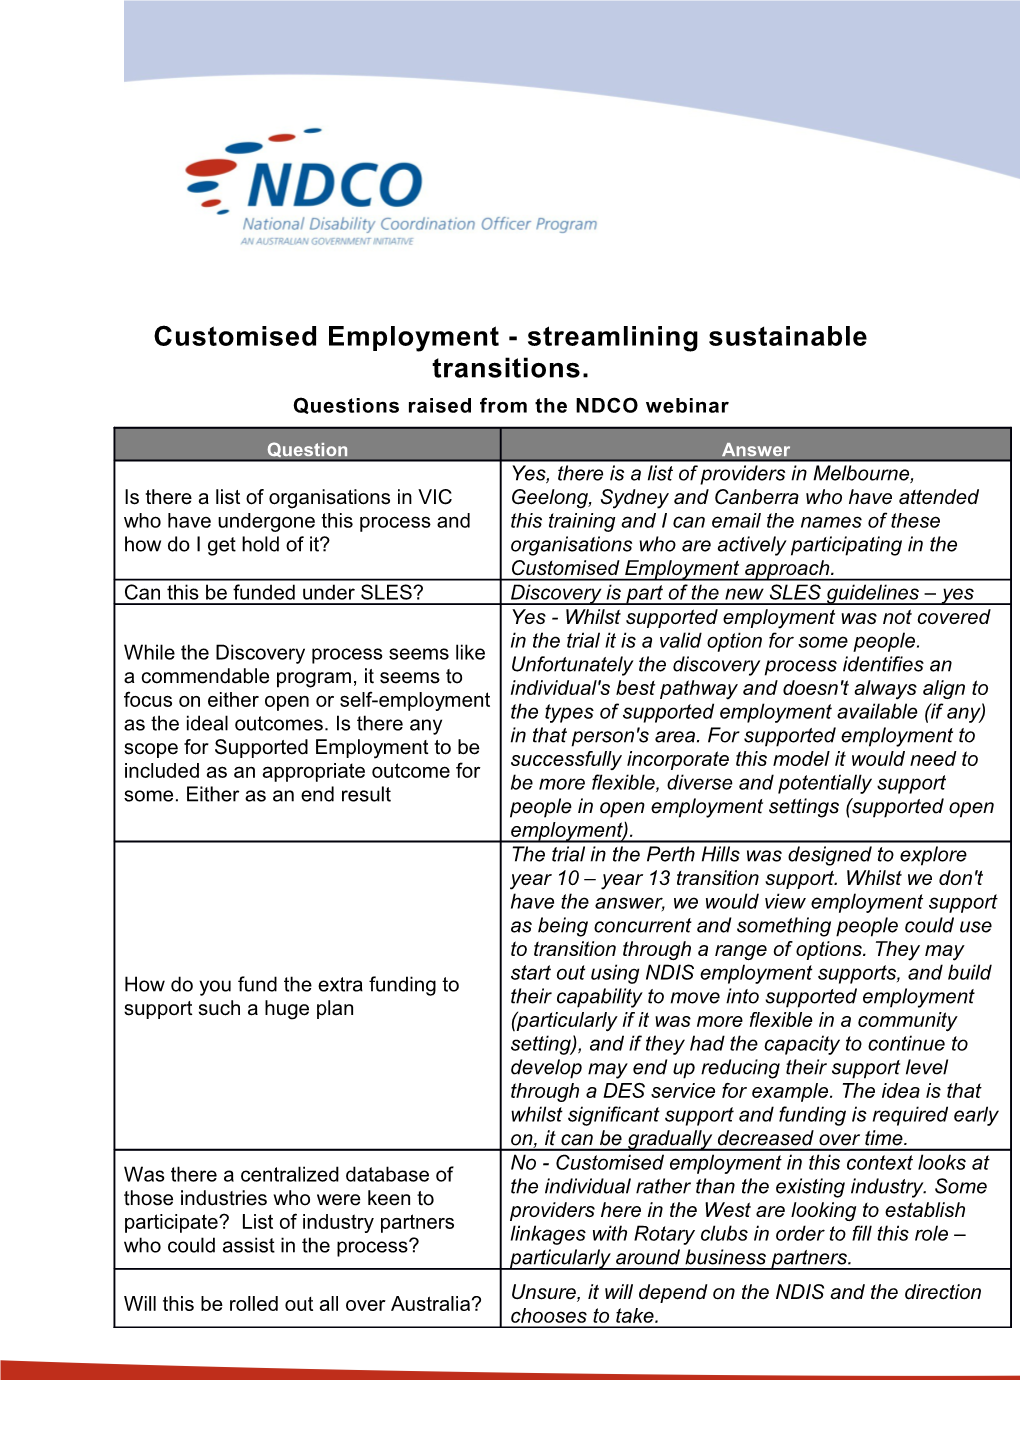 Customised Employment - Streamlining Sustainable Transitions